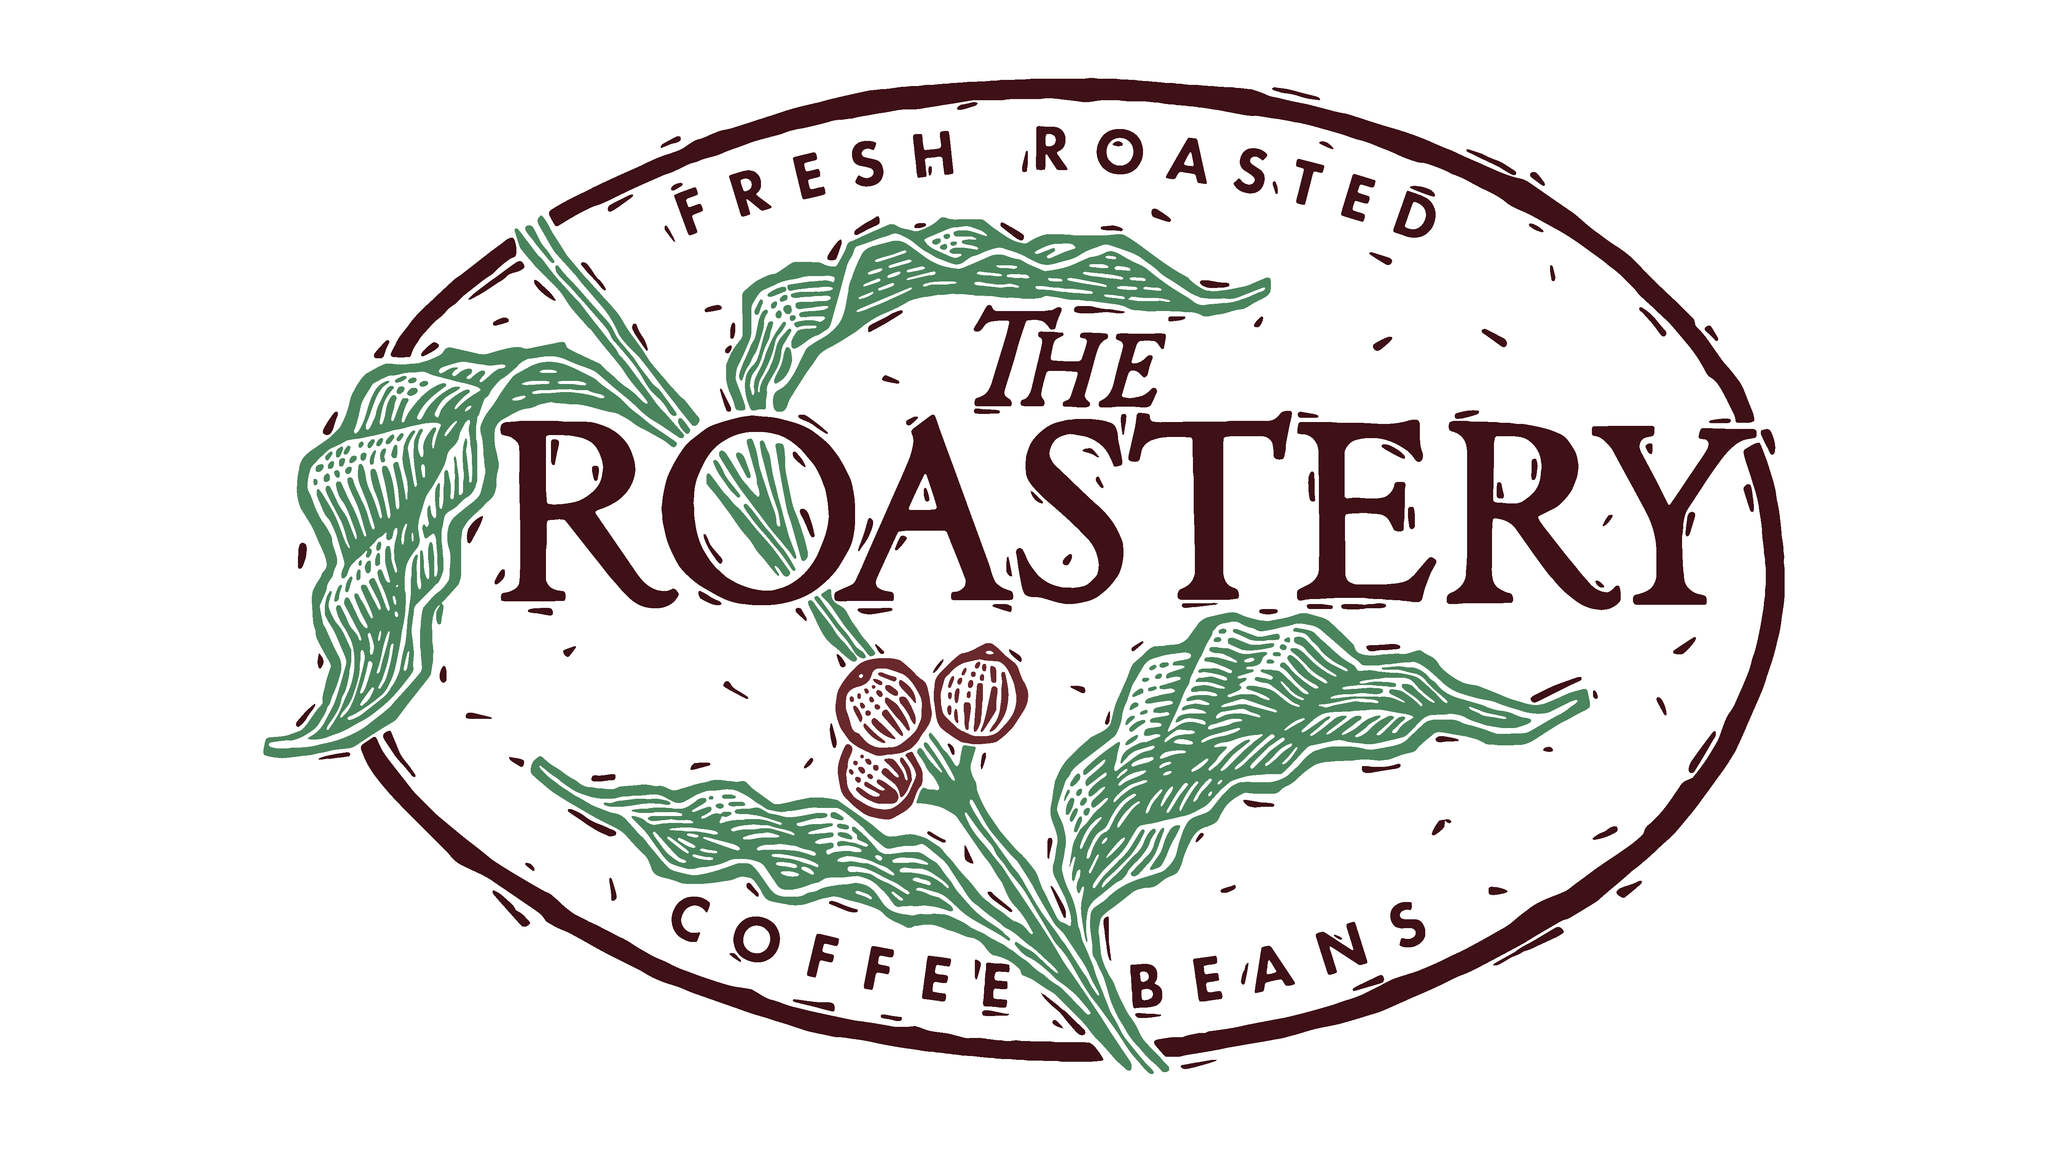 The Roastery: Fresh Roasted Coffee